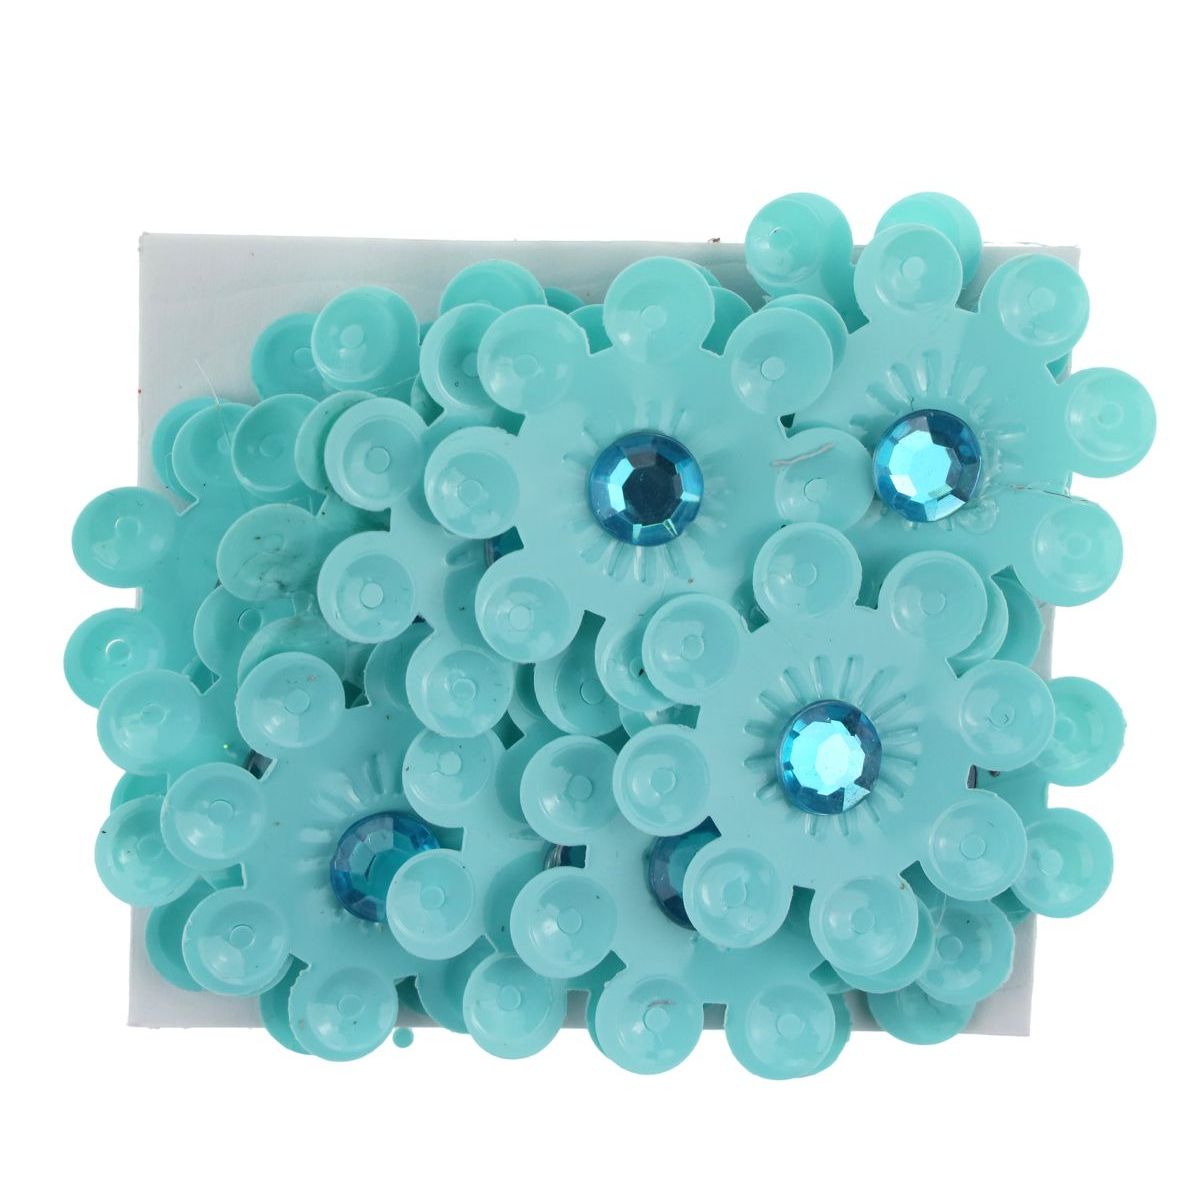 Kwiaty Titanum Craft-Fun Series samoprzylepne (2324043-blue)